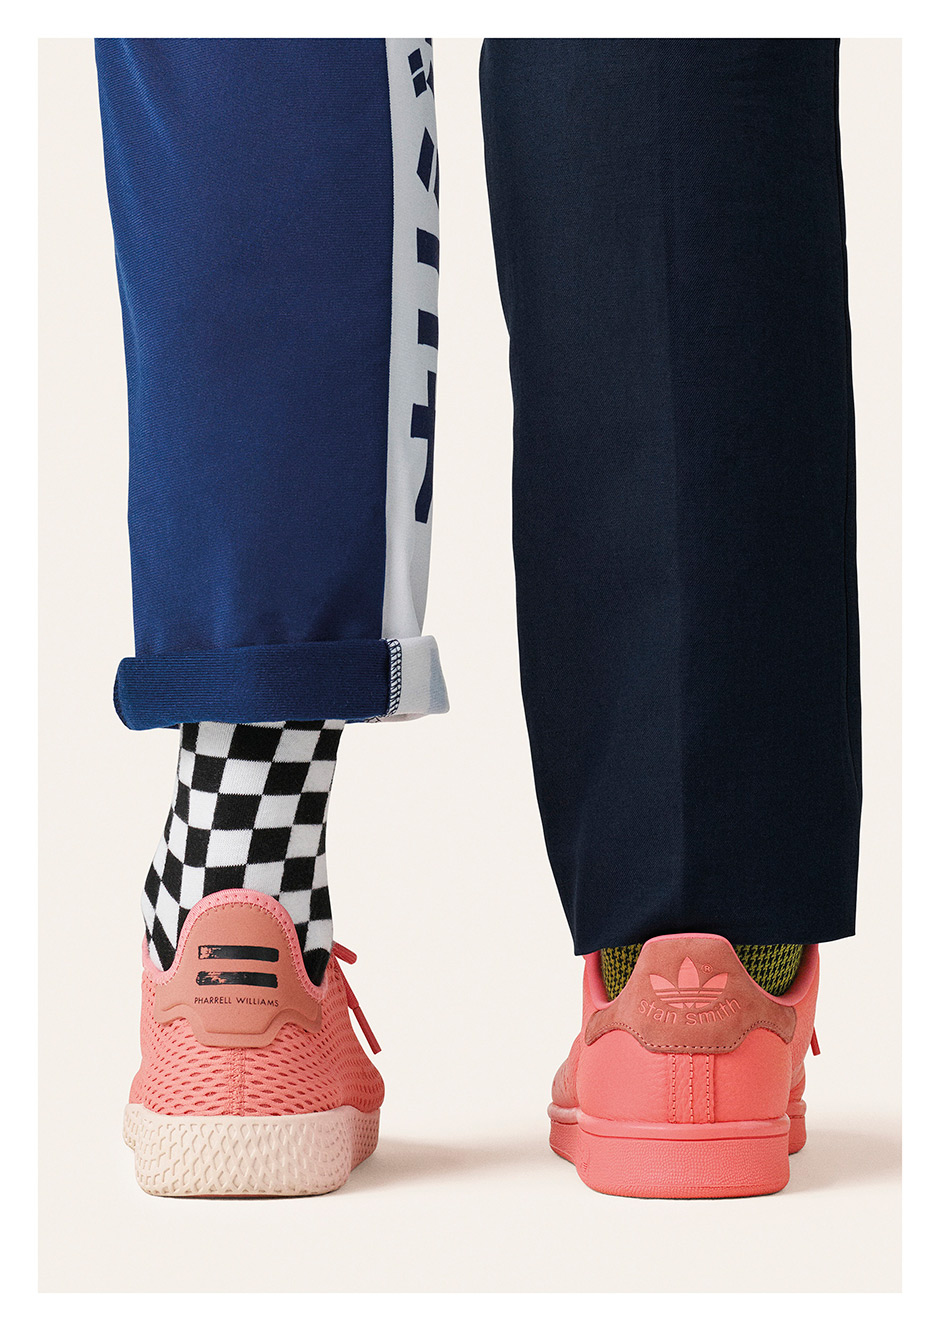 Pharrell adidas Tennis Hu 2 BB9452 + BB9453 First Look